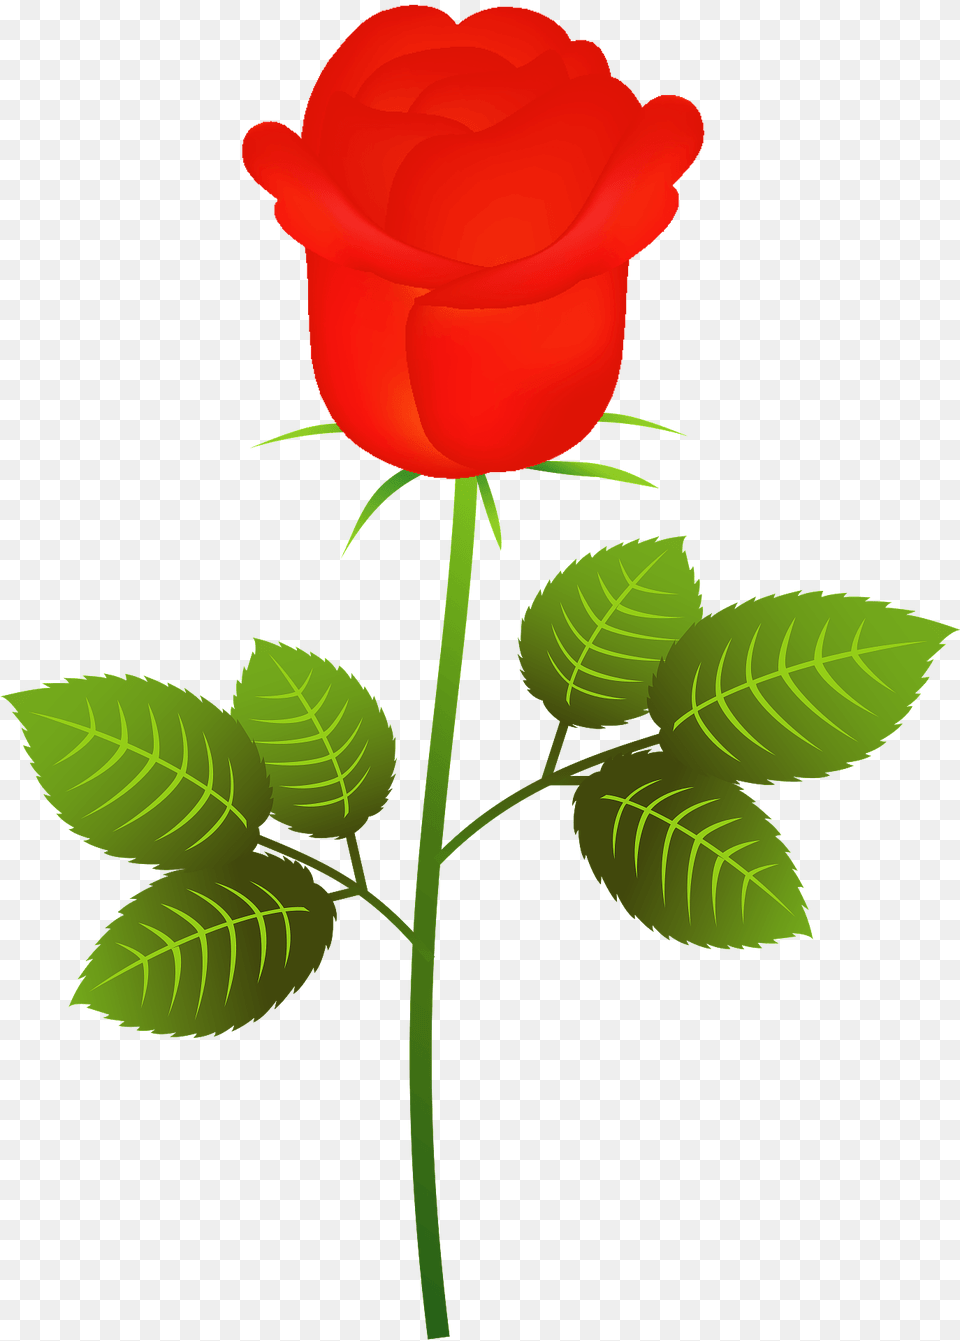 Red Rose On The Stem Clipart, Flower, Plant, Leaf Png